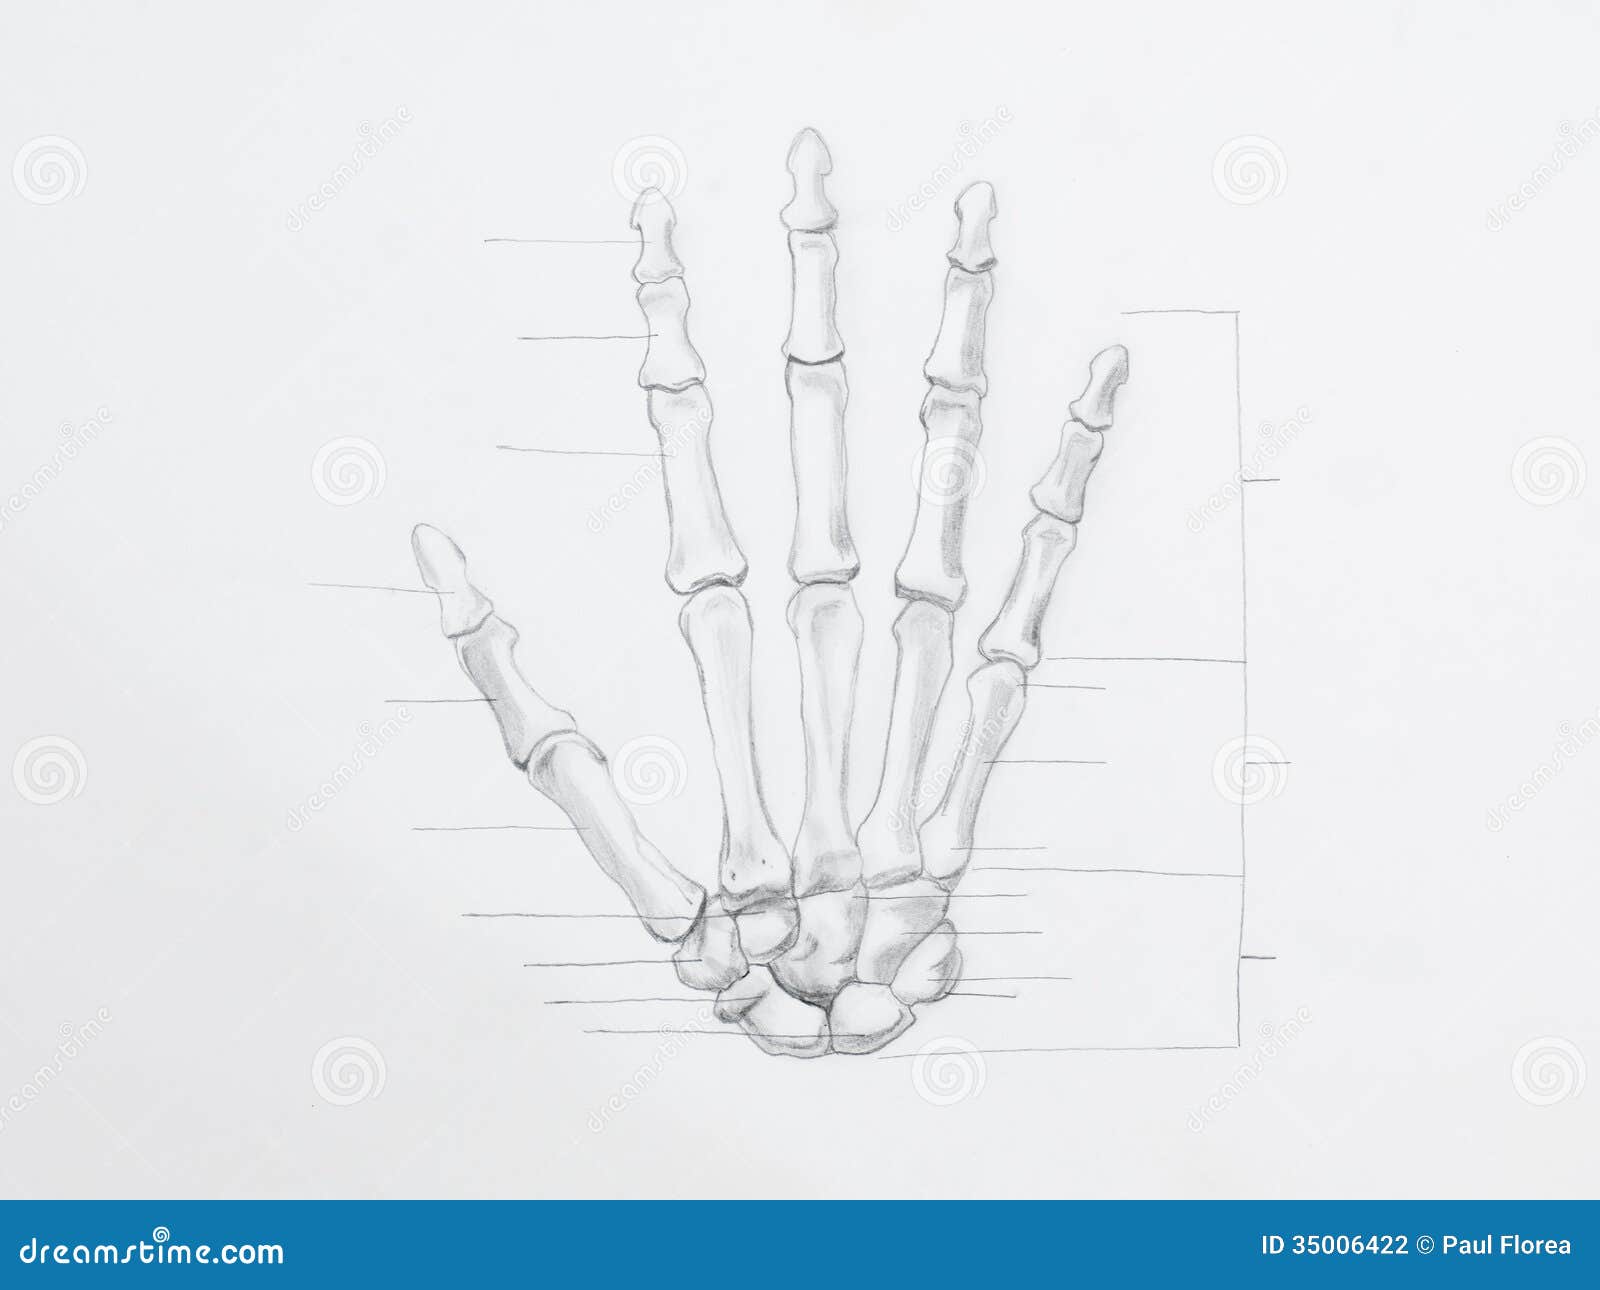 hand bones pencil drawing